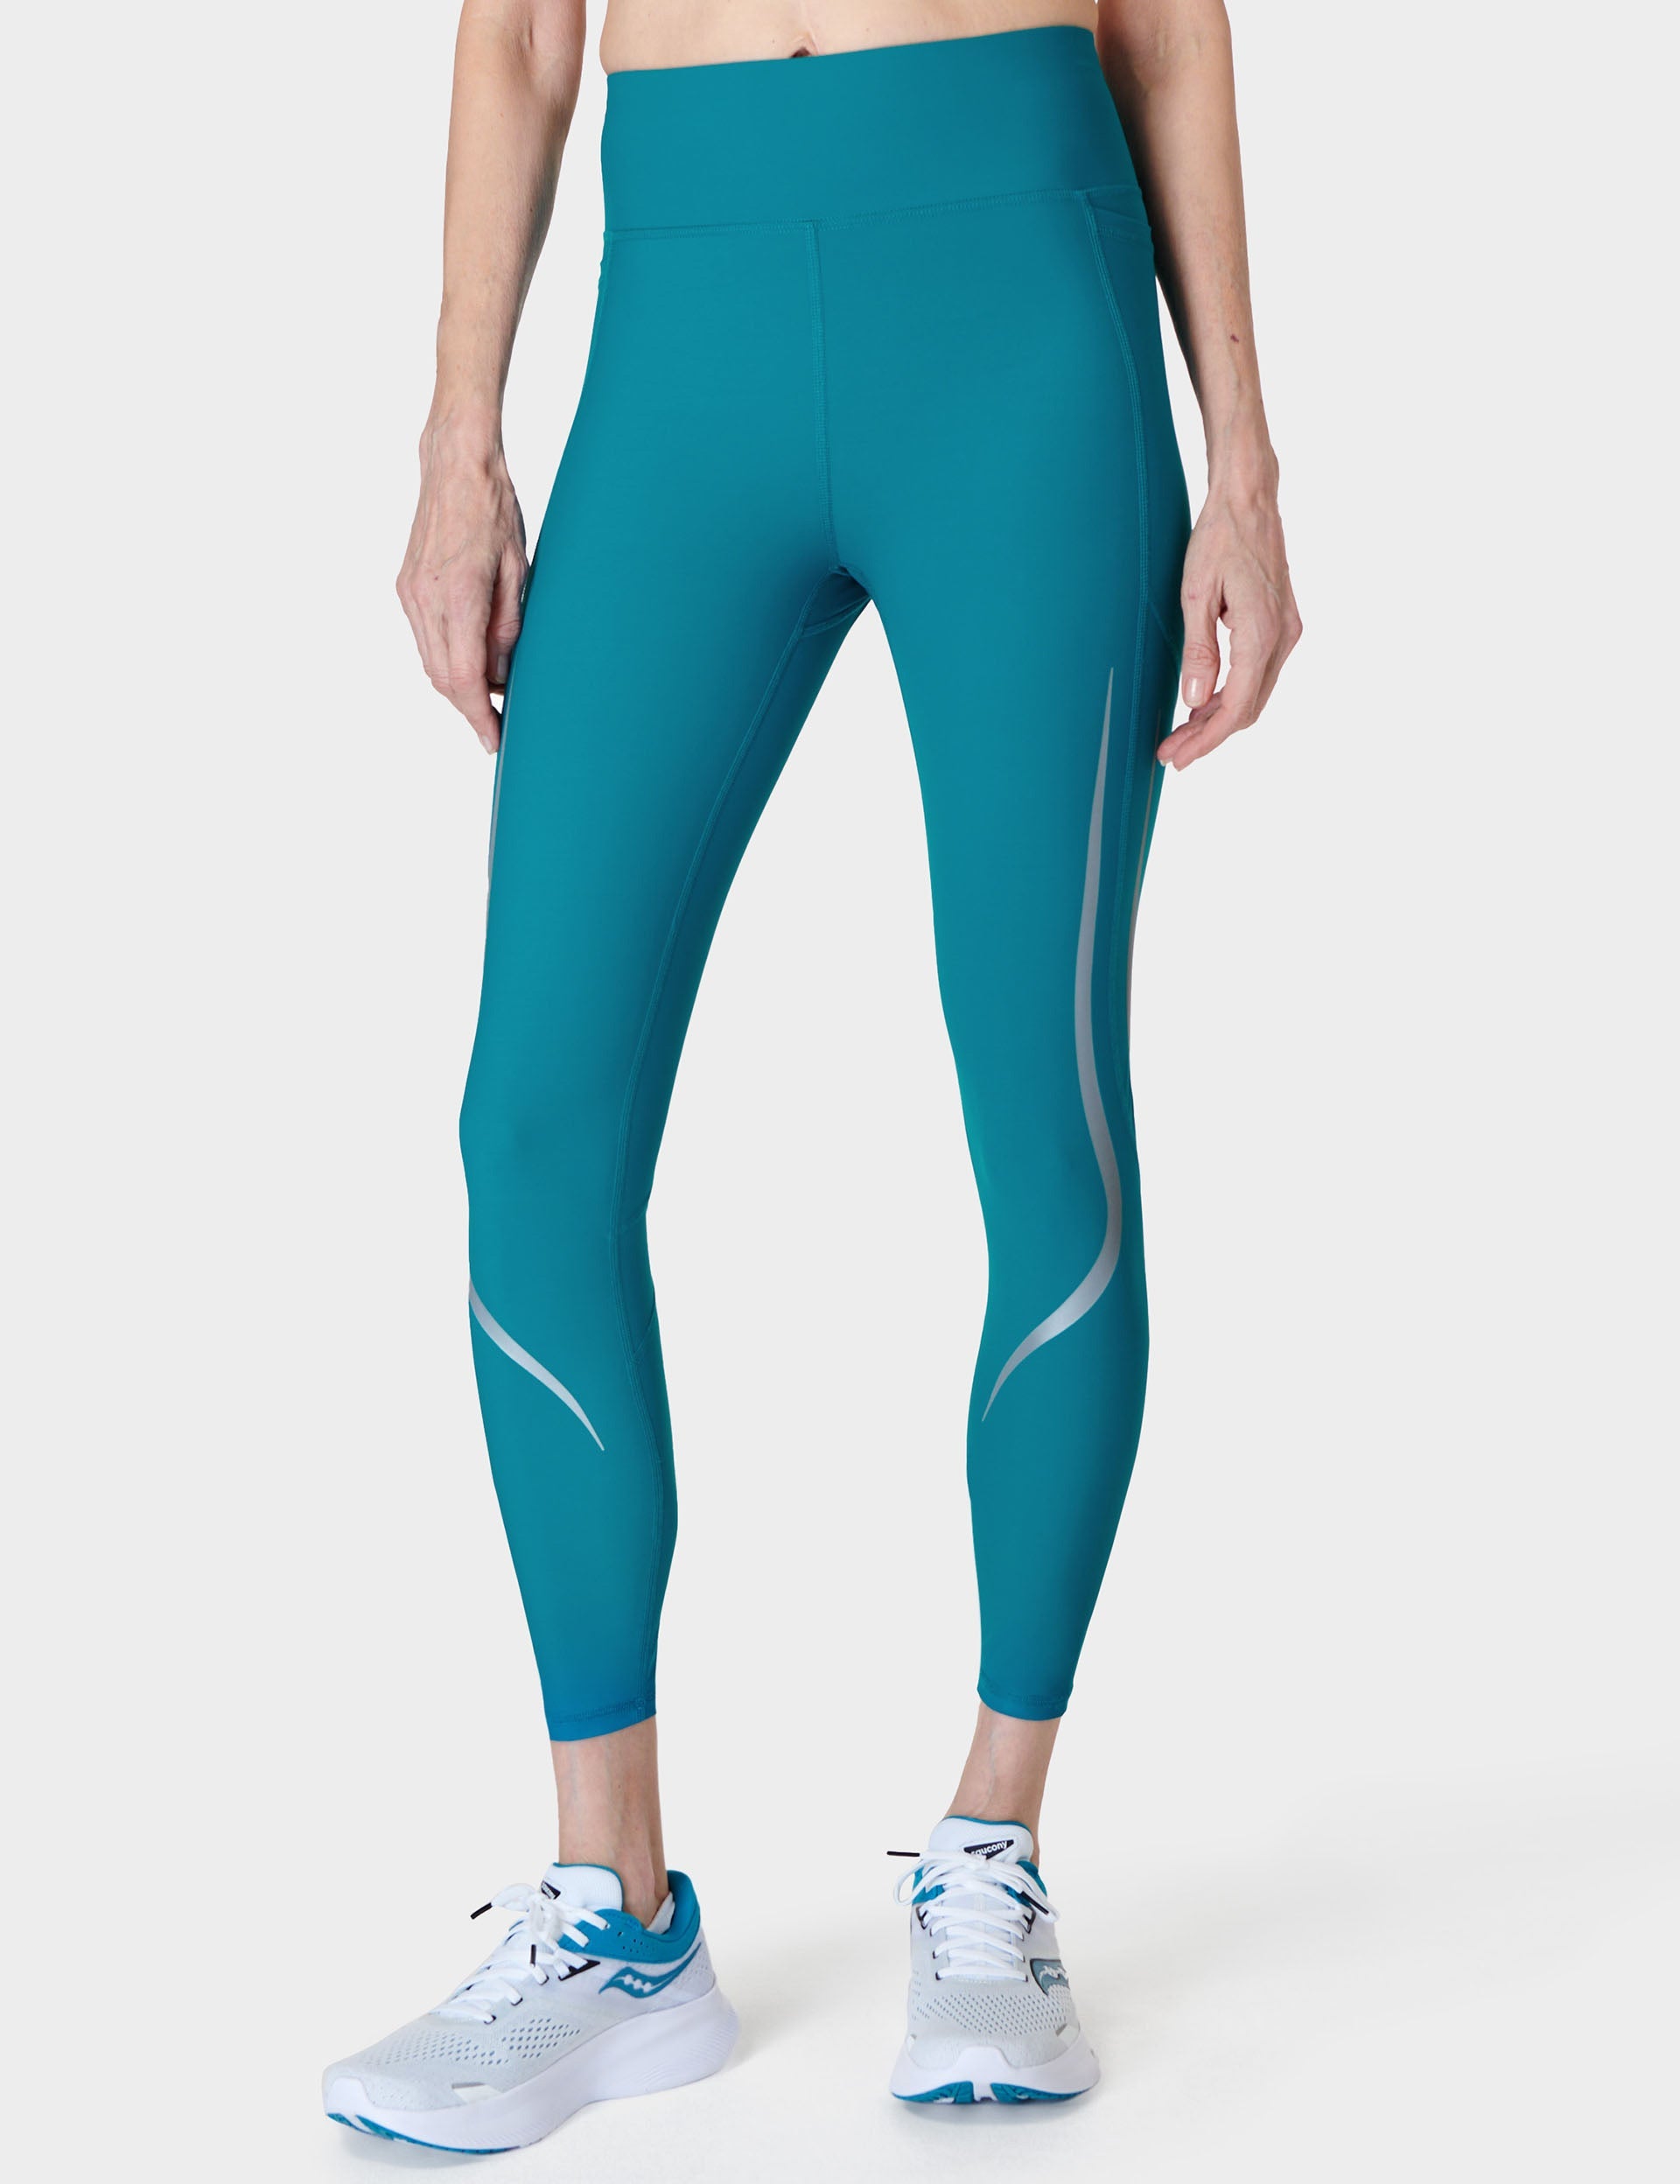 Pockets For Women - Sweaty Betty Zero Gravity High-Waisted Running Leggings,  Blue, Women's